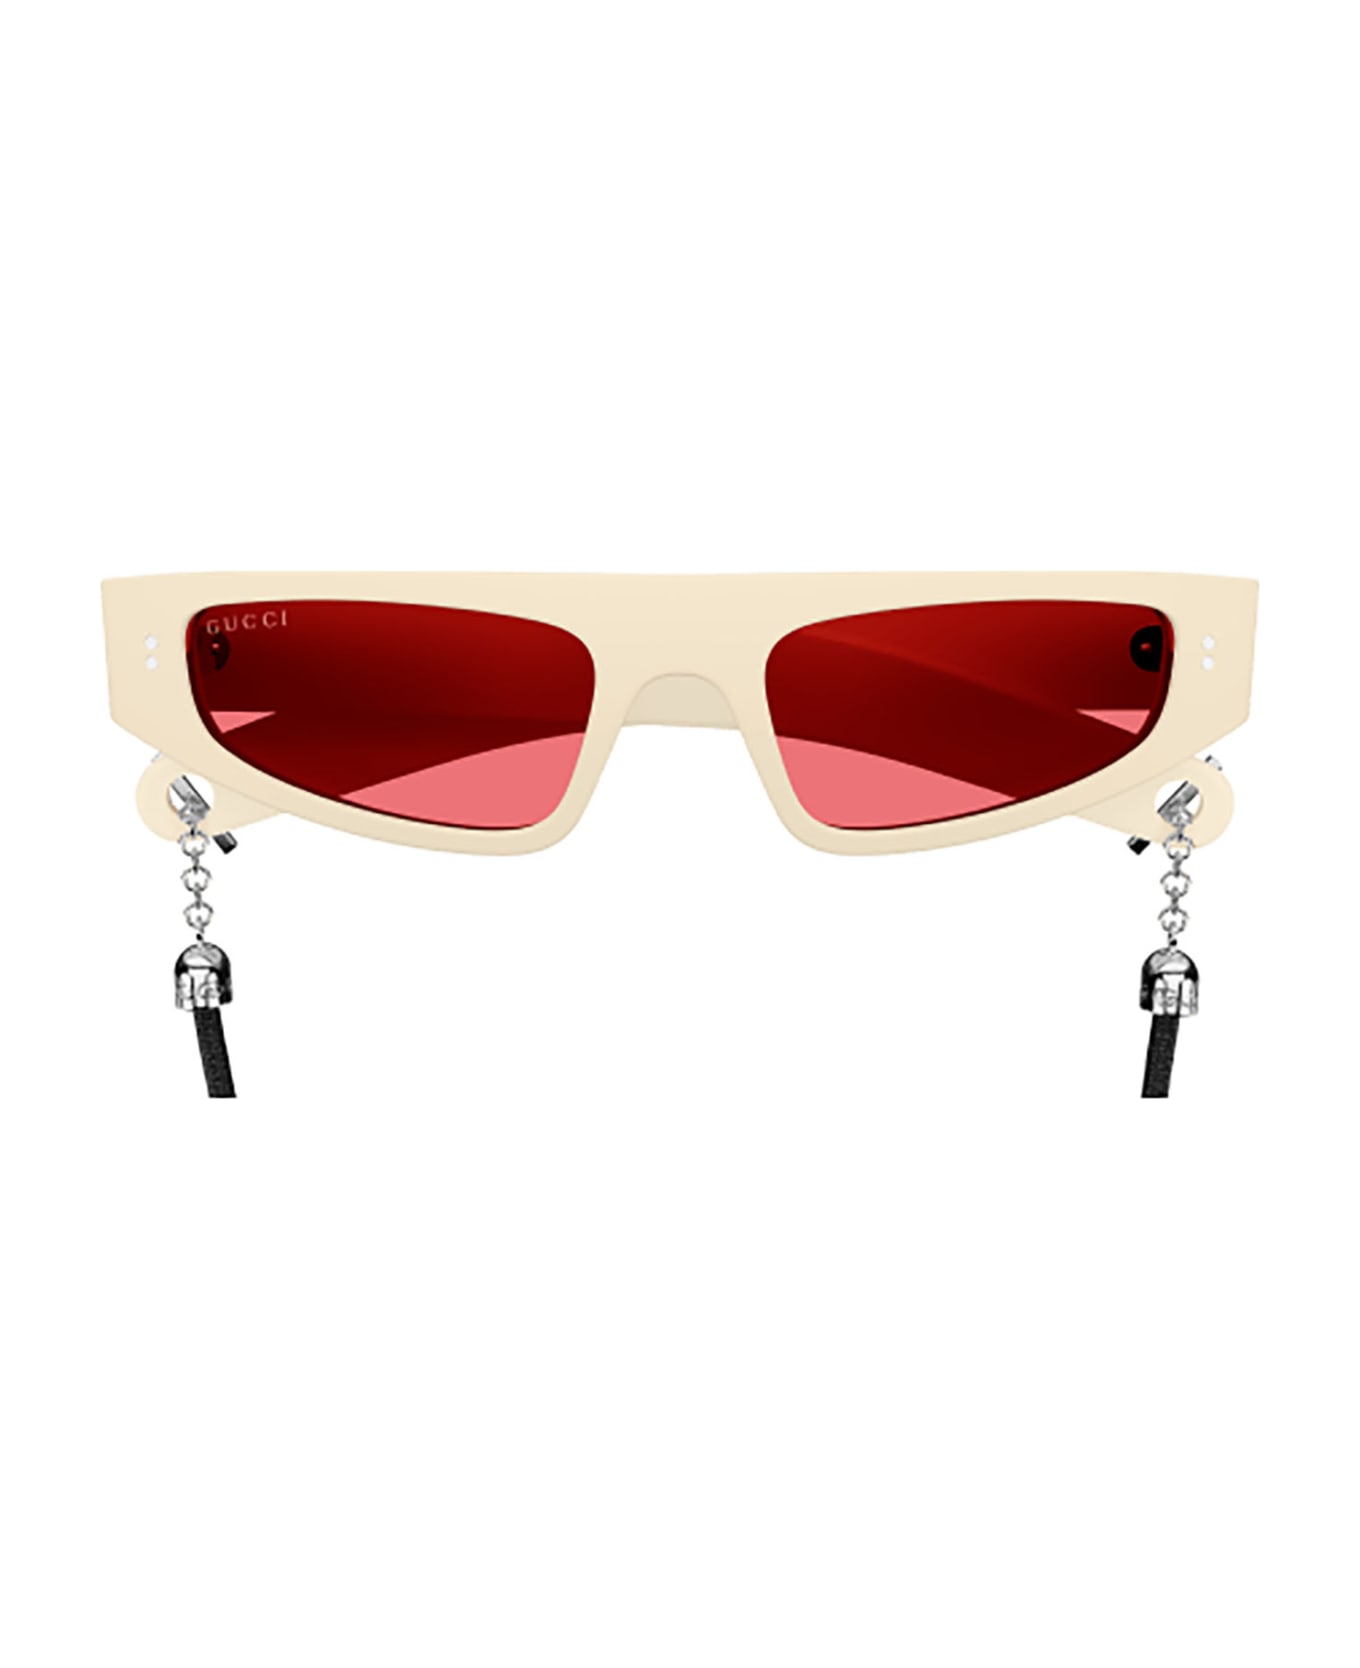 Gucci Eyewear GG1634S Sunglasses - Ivory Ivory Red